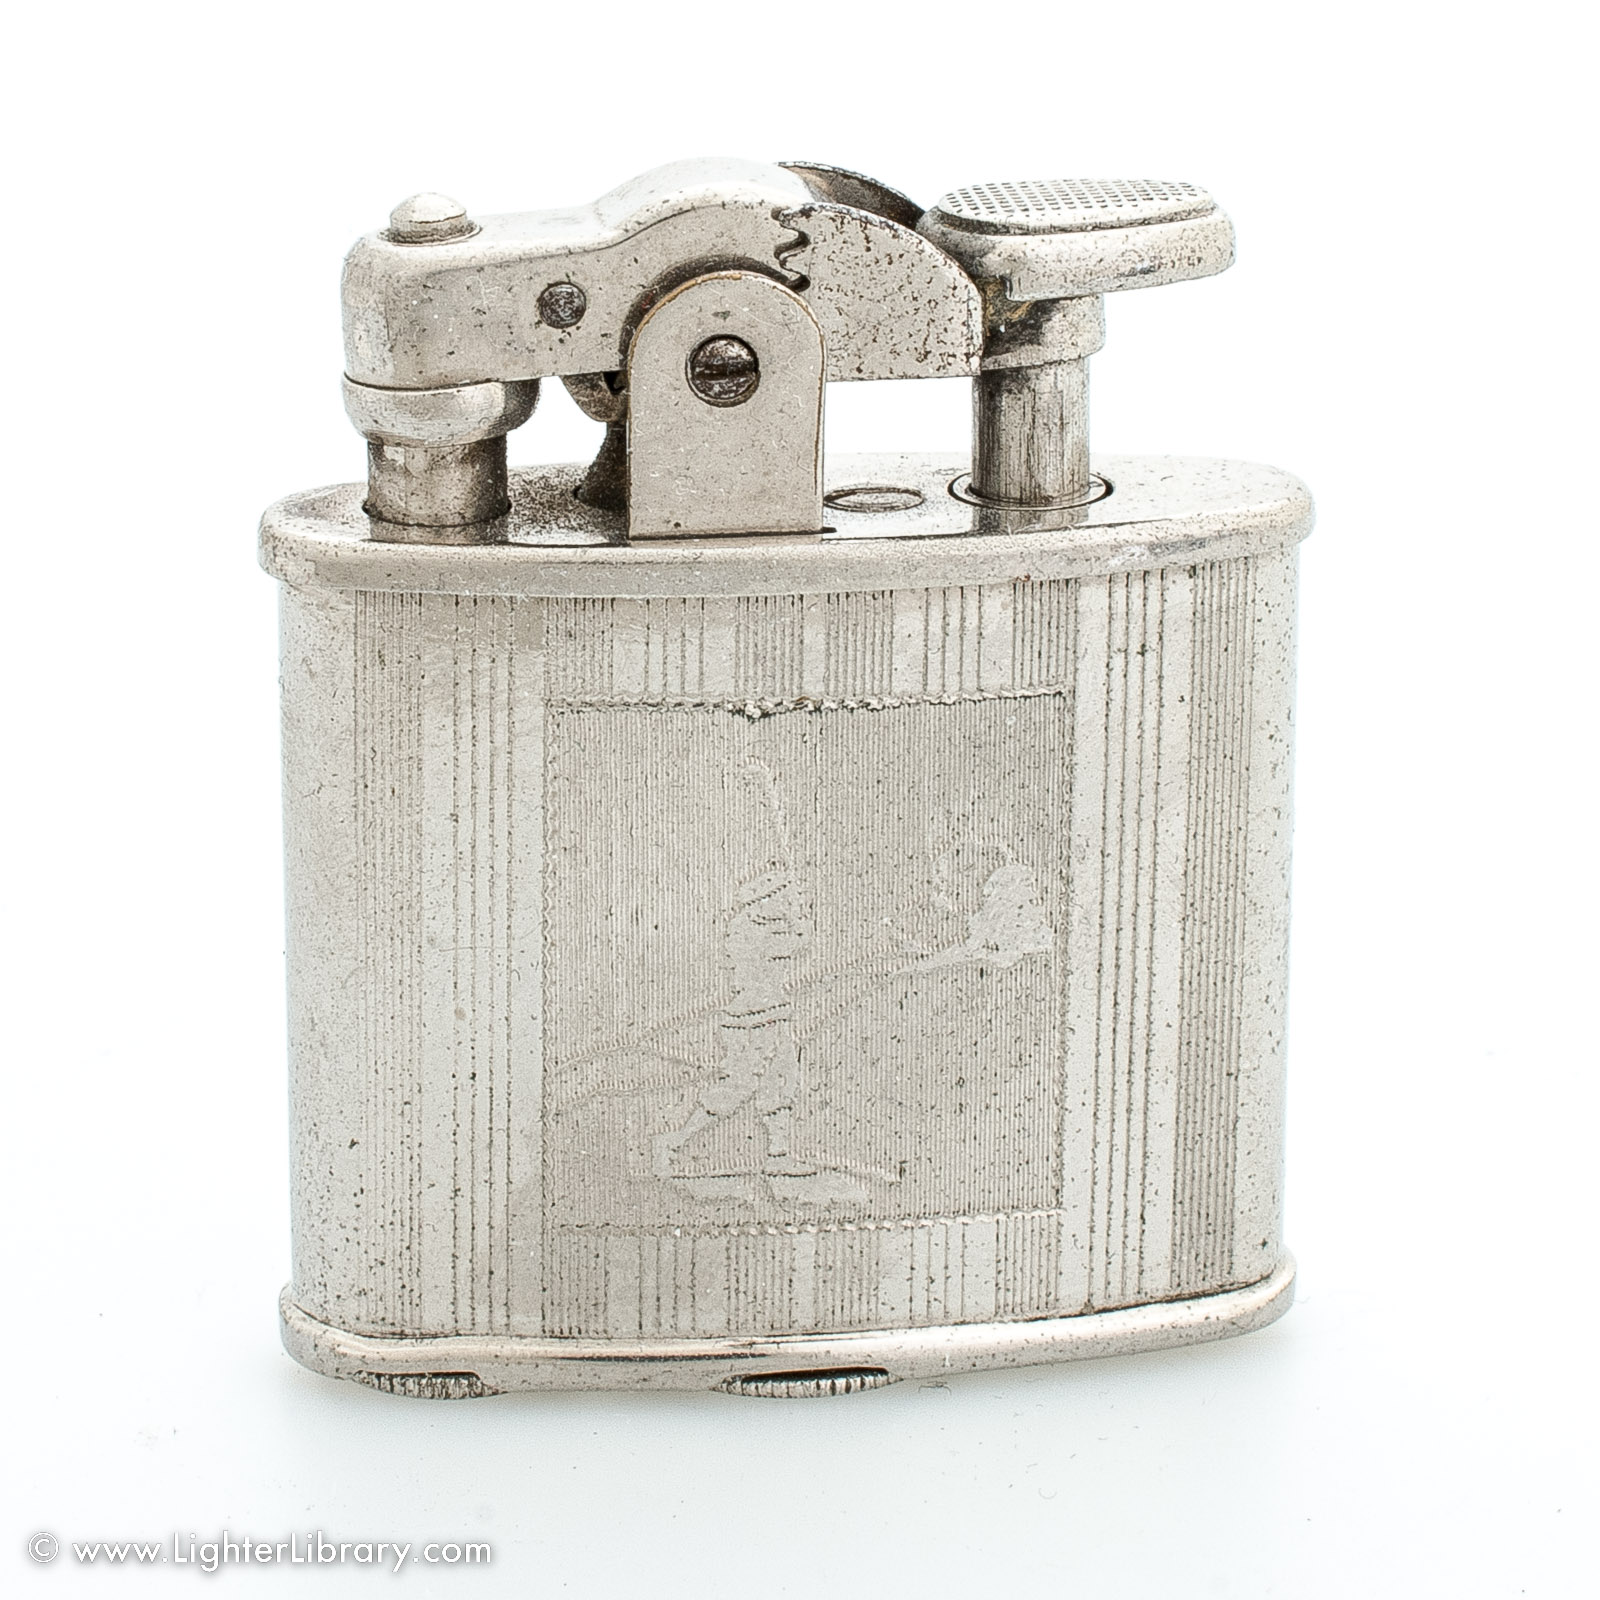 Ronson Art Metal Works - De-Light Standard pocket lighters